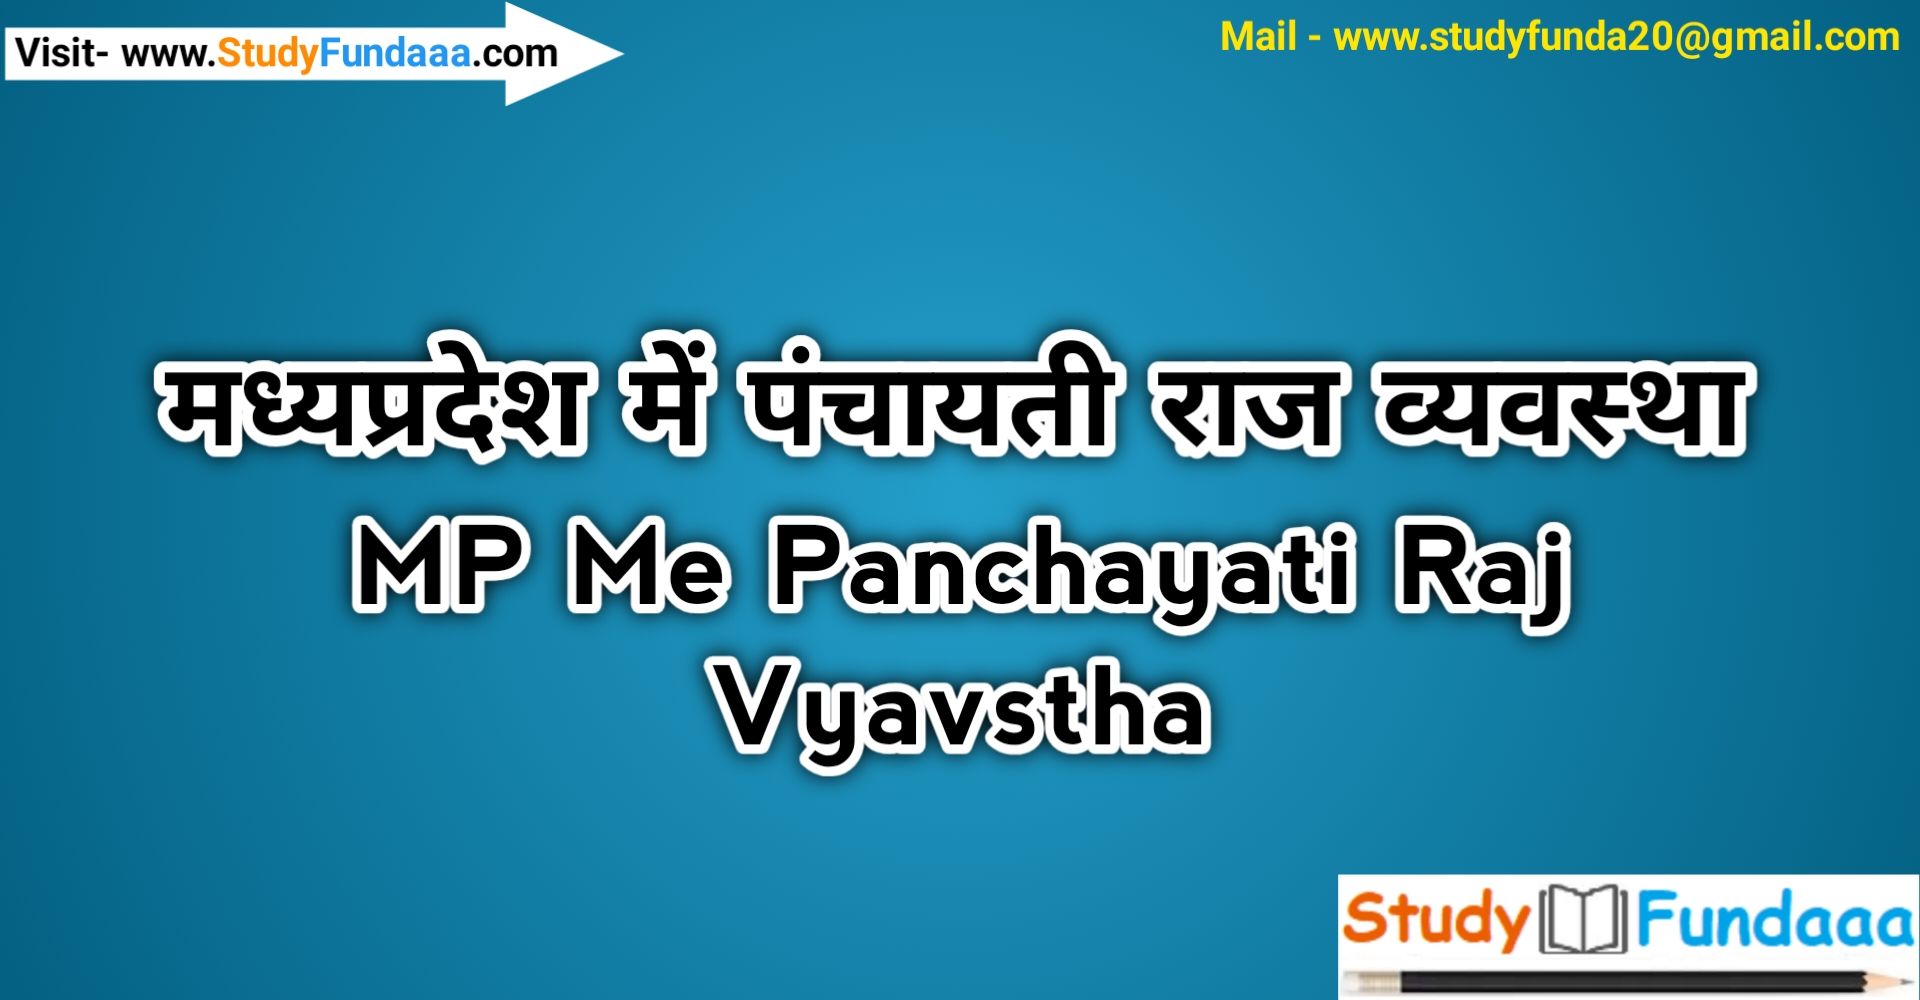 मध्यप्रदेश में पंचायती राज | MP Me Panchayti Raj | Mp Me Panchayati Raj Vyavastha